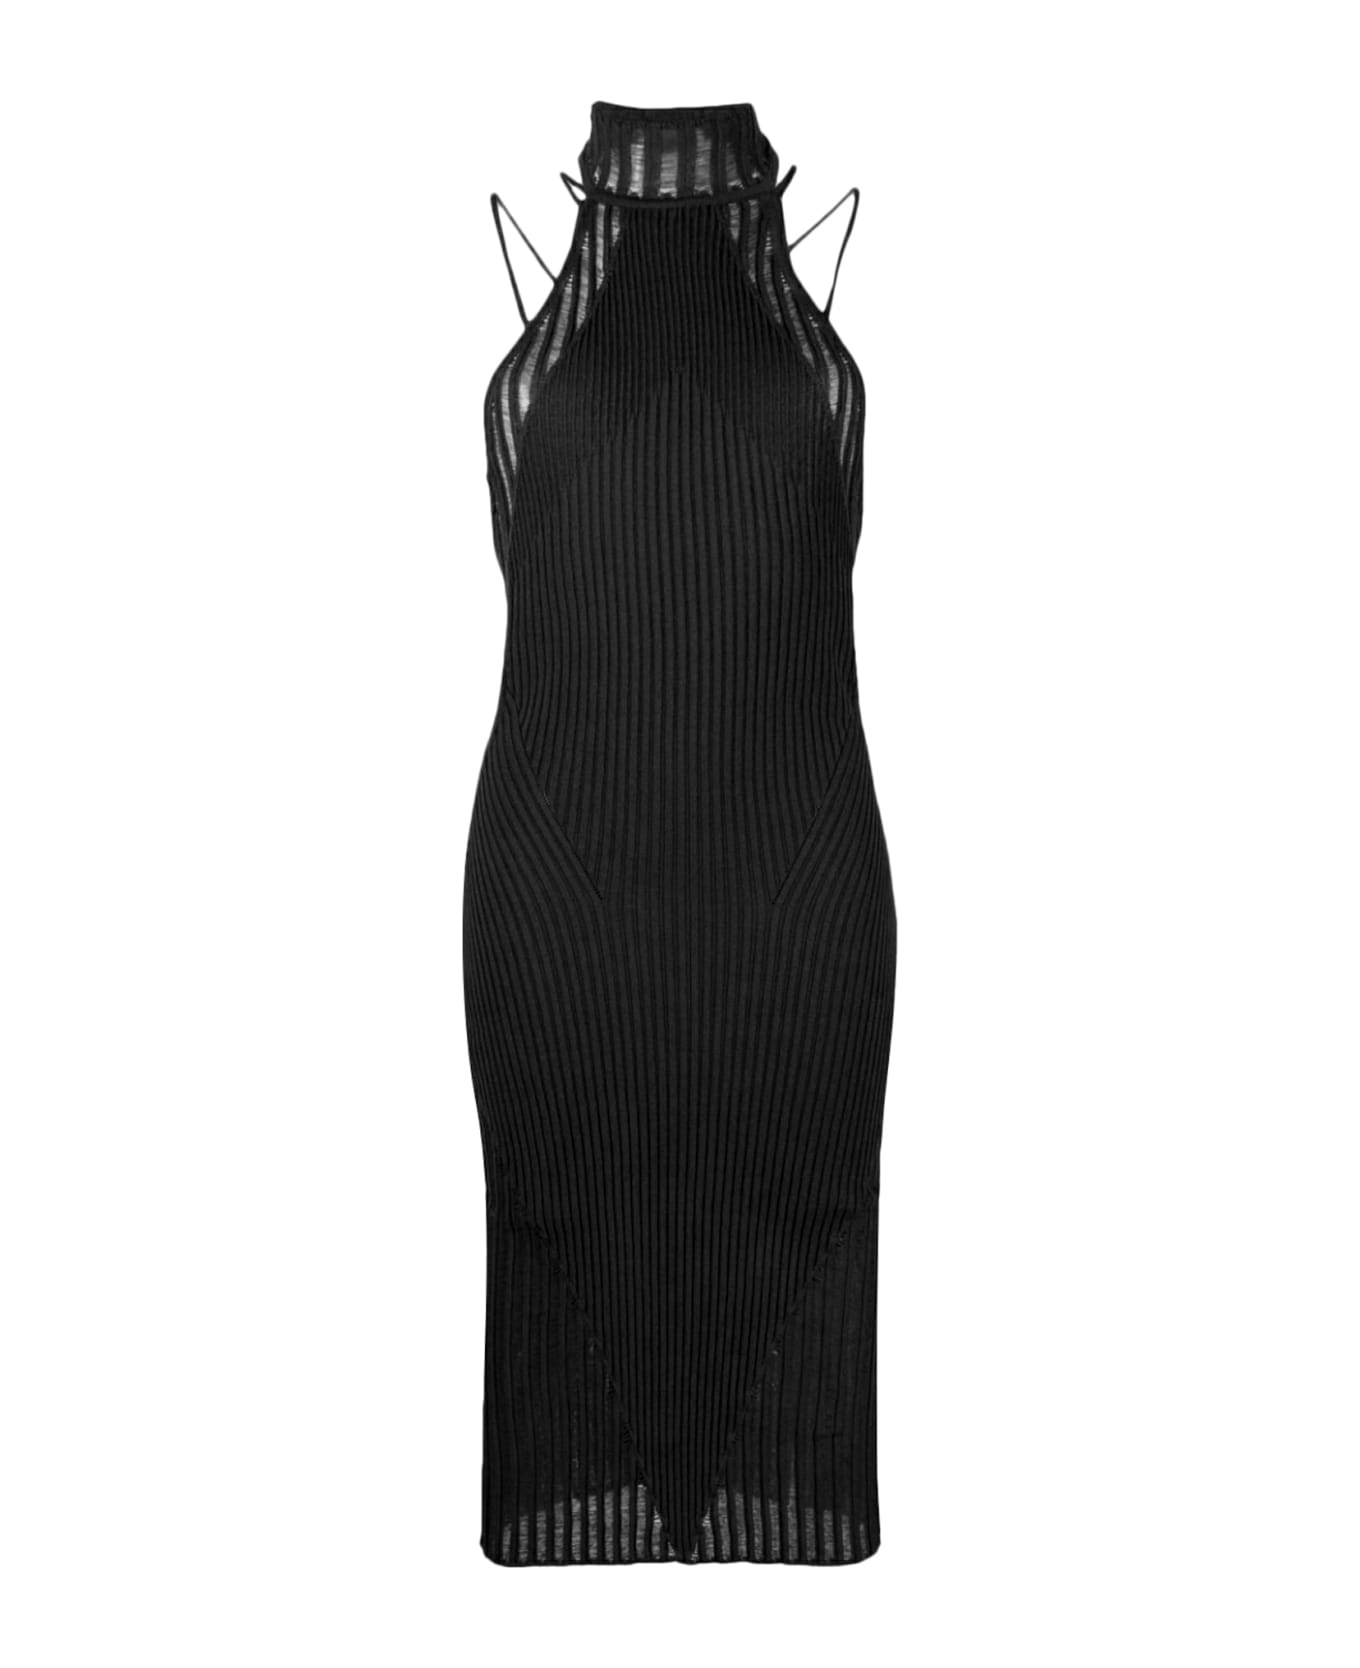 ANDREĀDAMO Ribbed Knit Midi Dress With Floating Det - Black